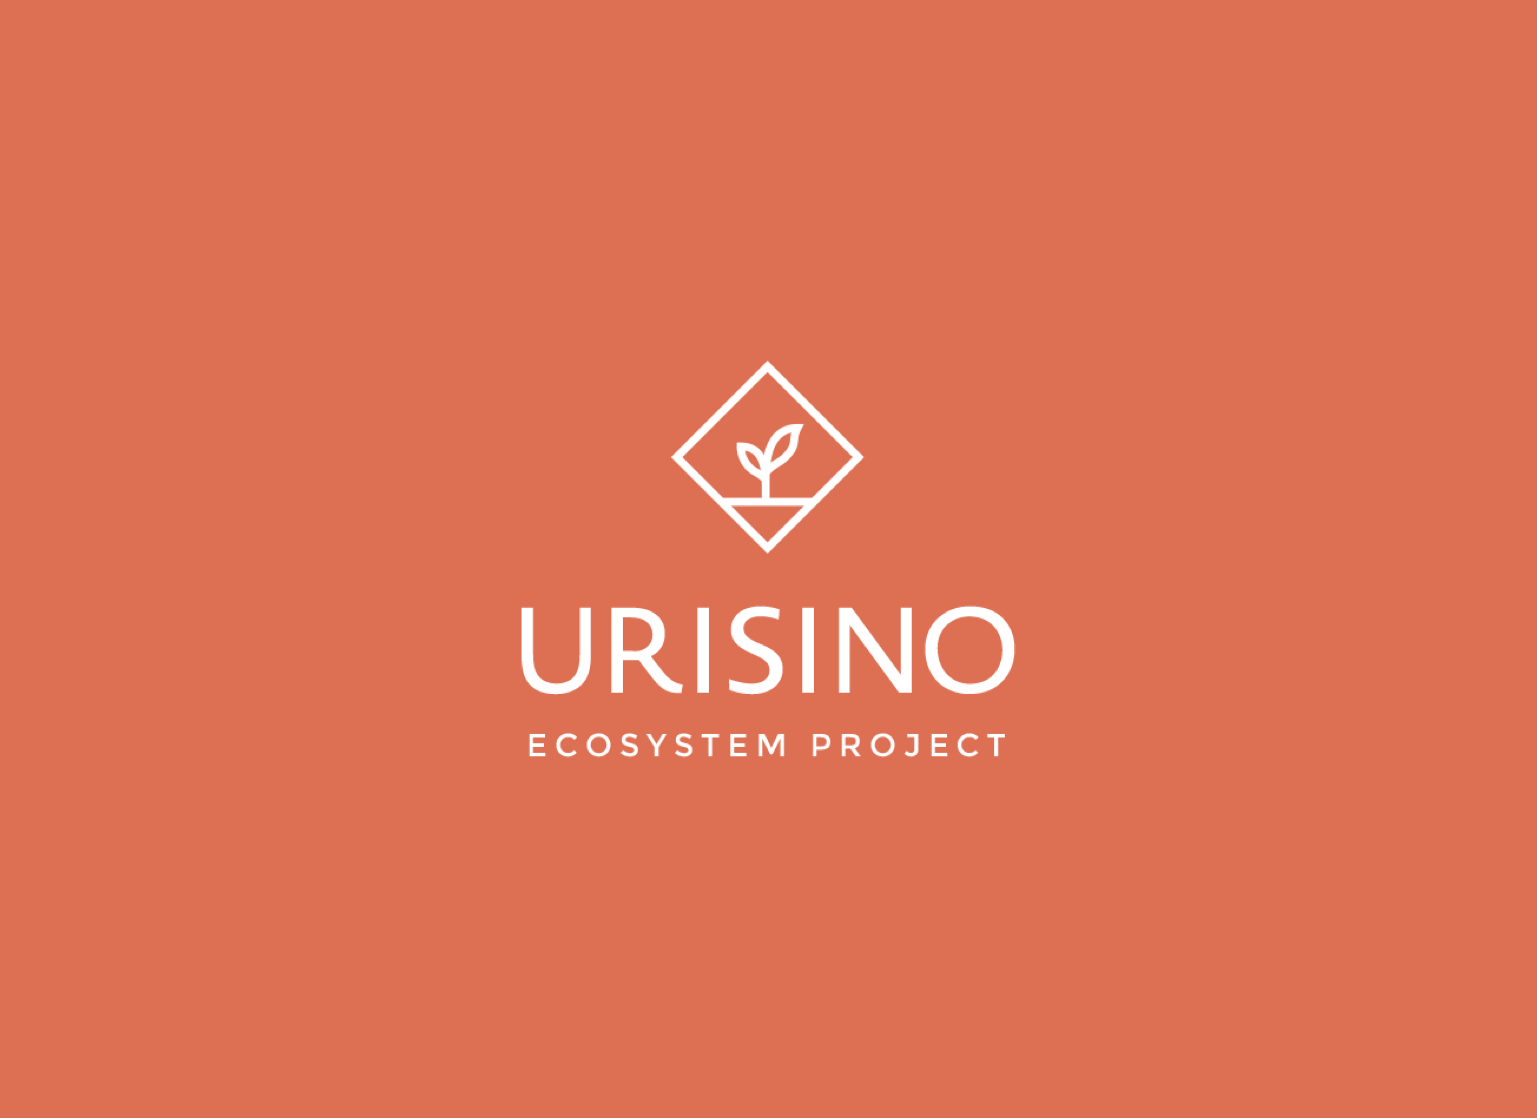 2 urisino brand guide